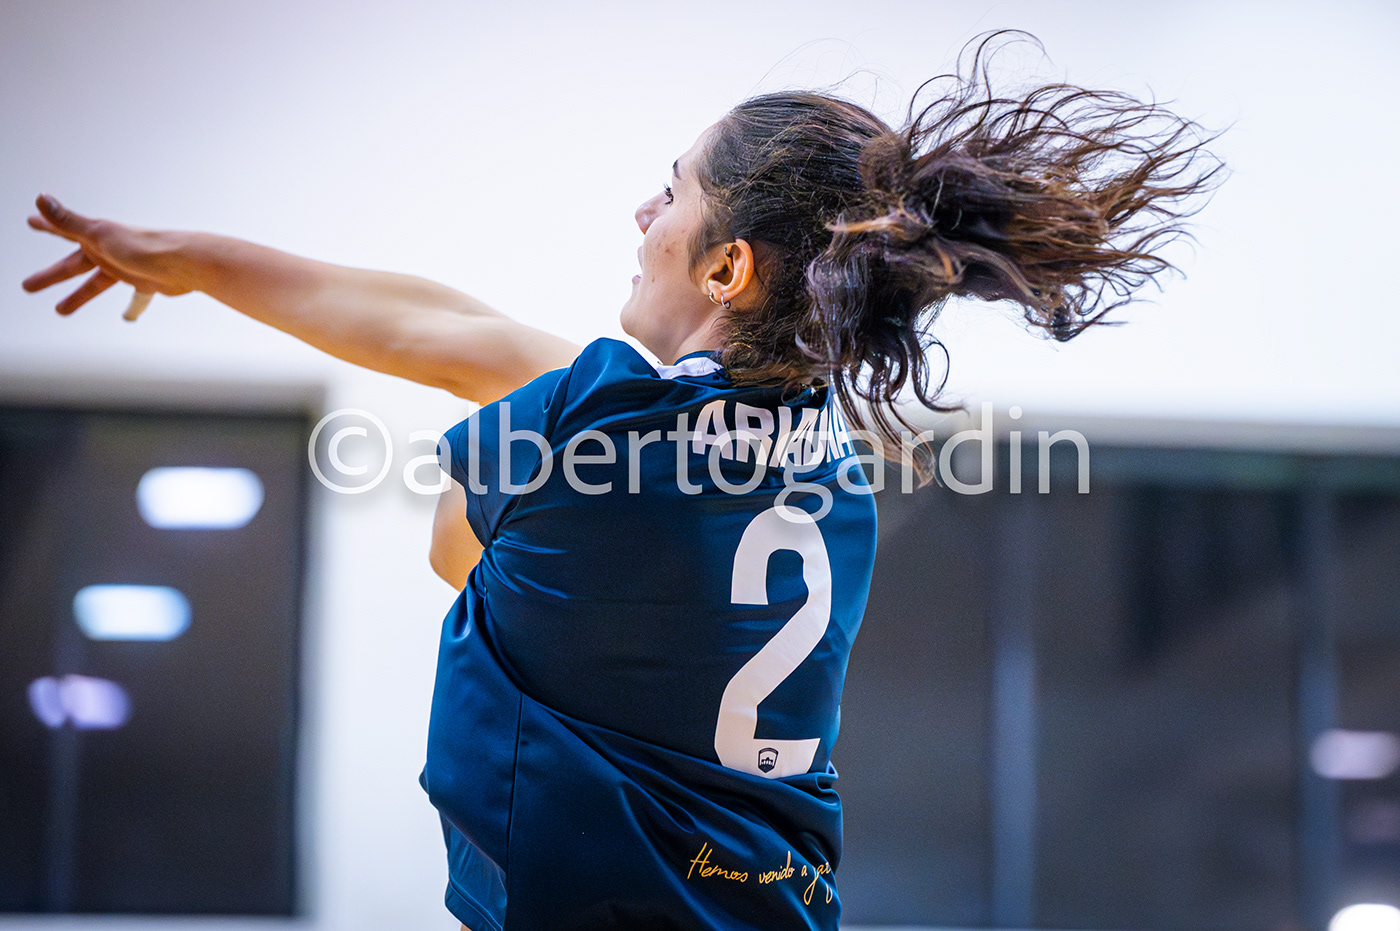 sport volleyball volley girls women Photography  photographer sportphotography madrid Nikon